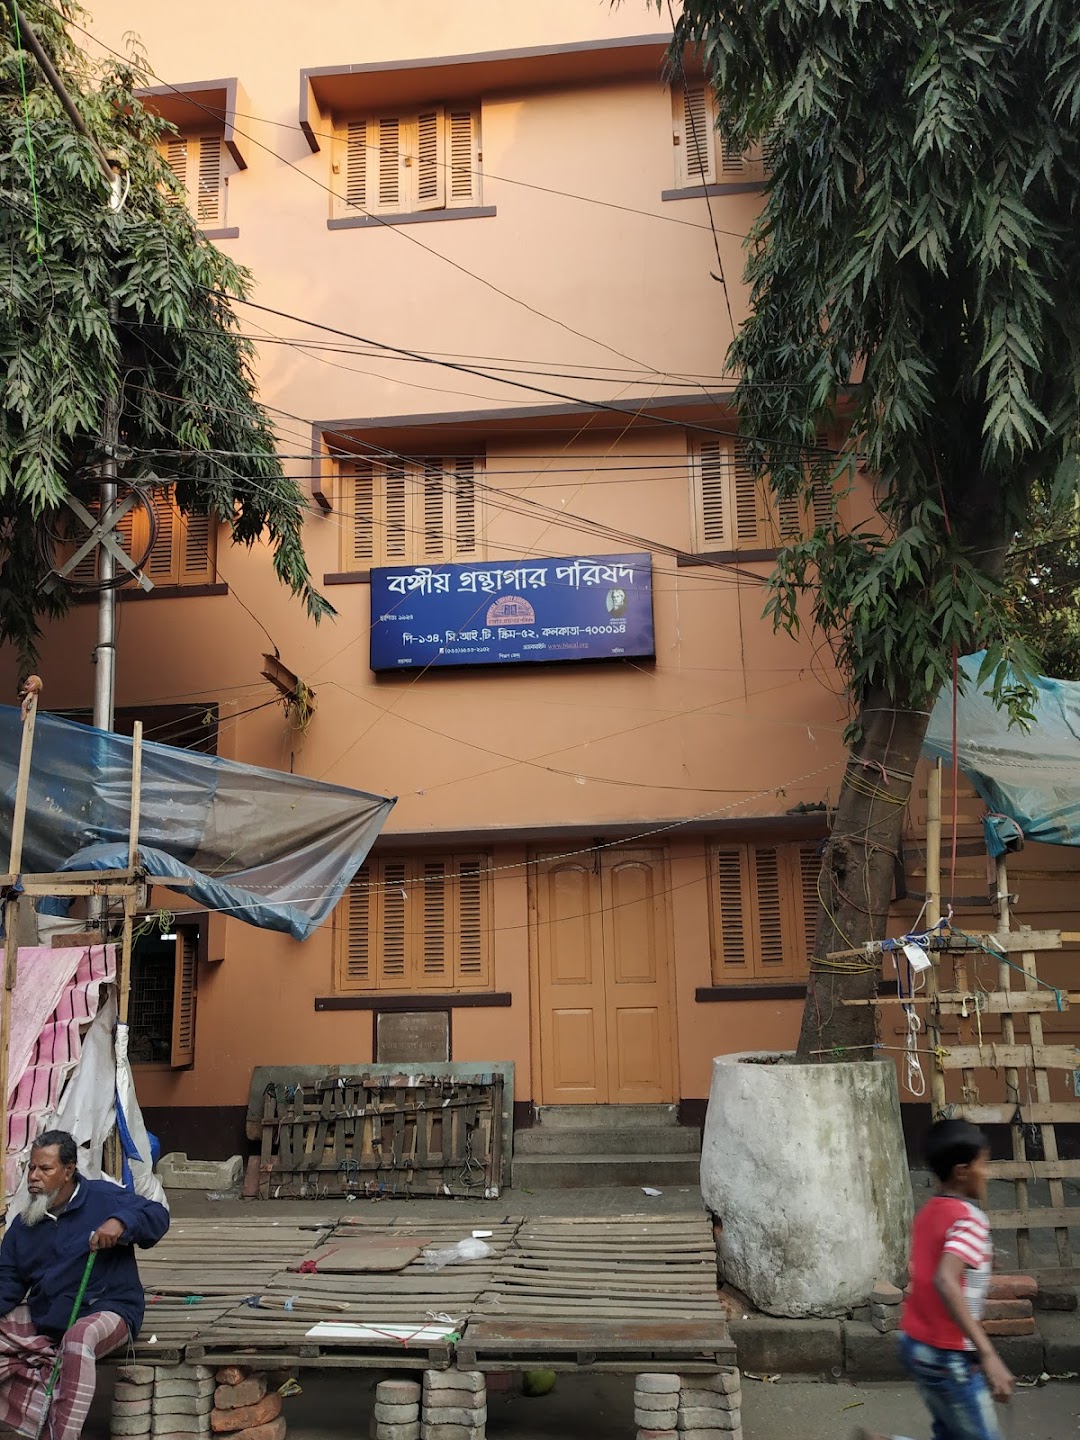 Bengal Library Association